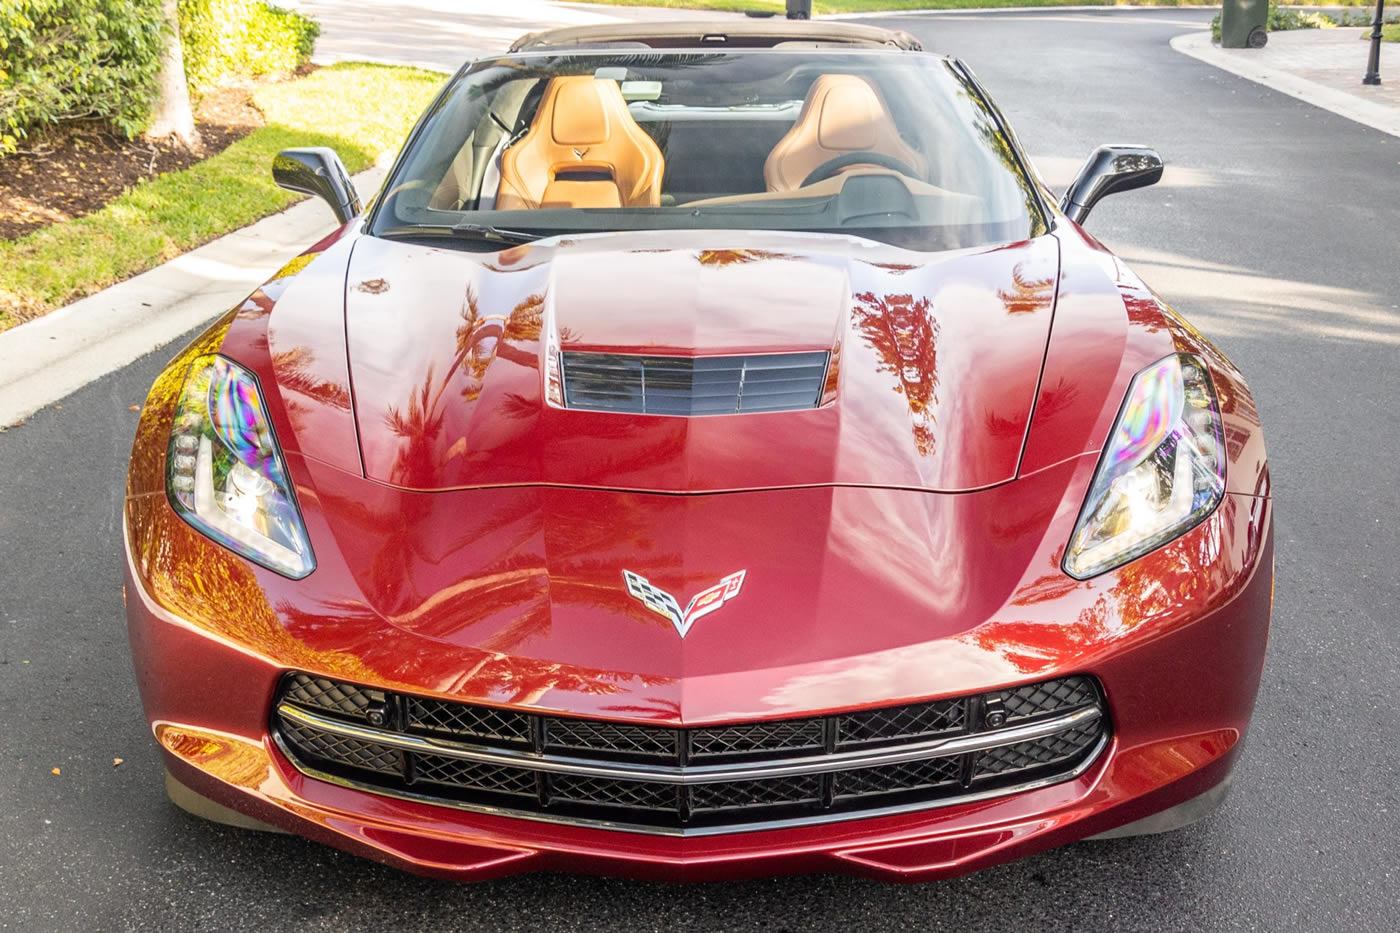 2017 Corvette Stingray Coupe in Long Beach Red Metallic